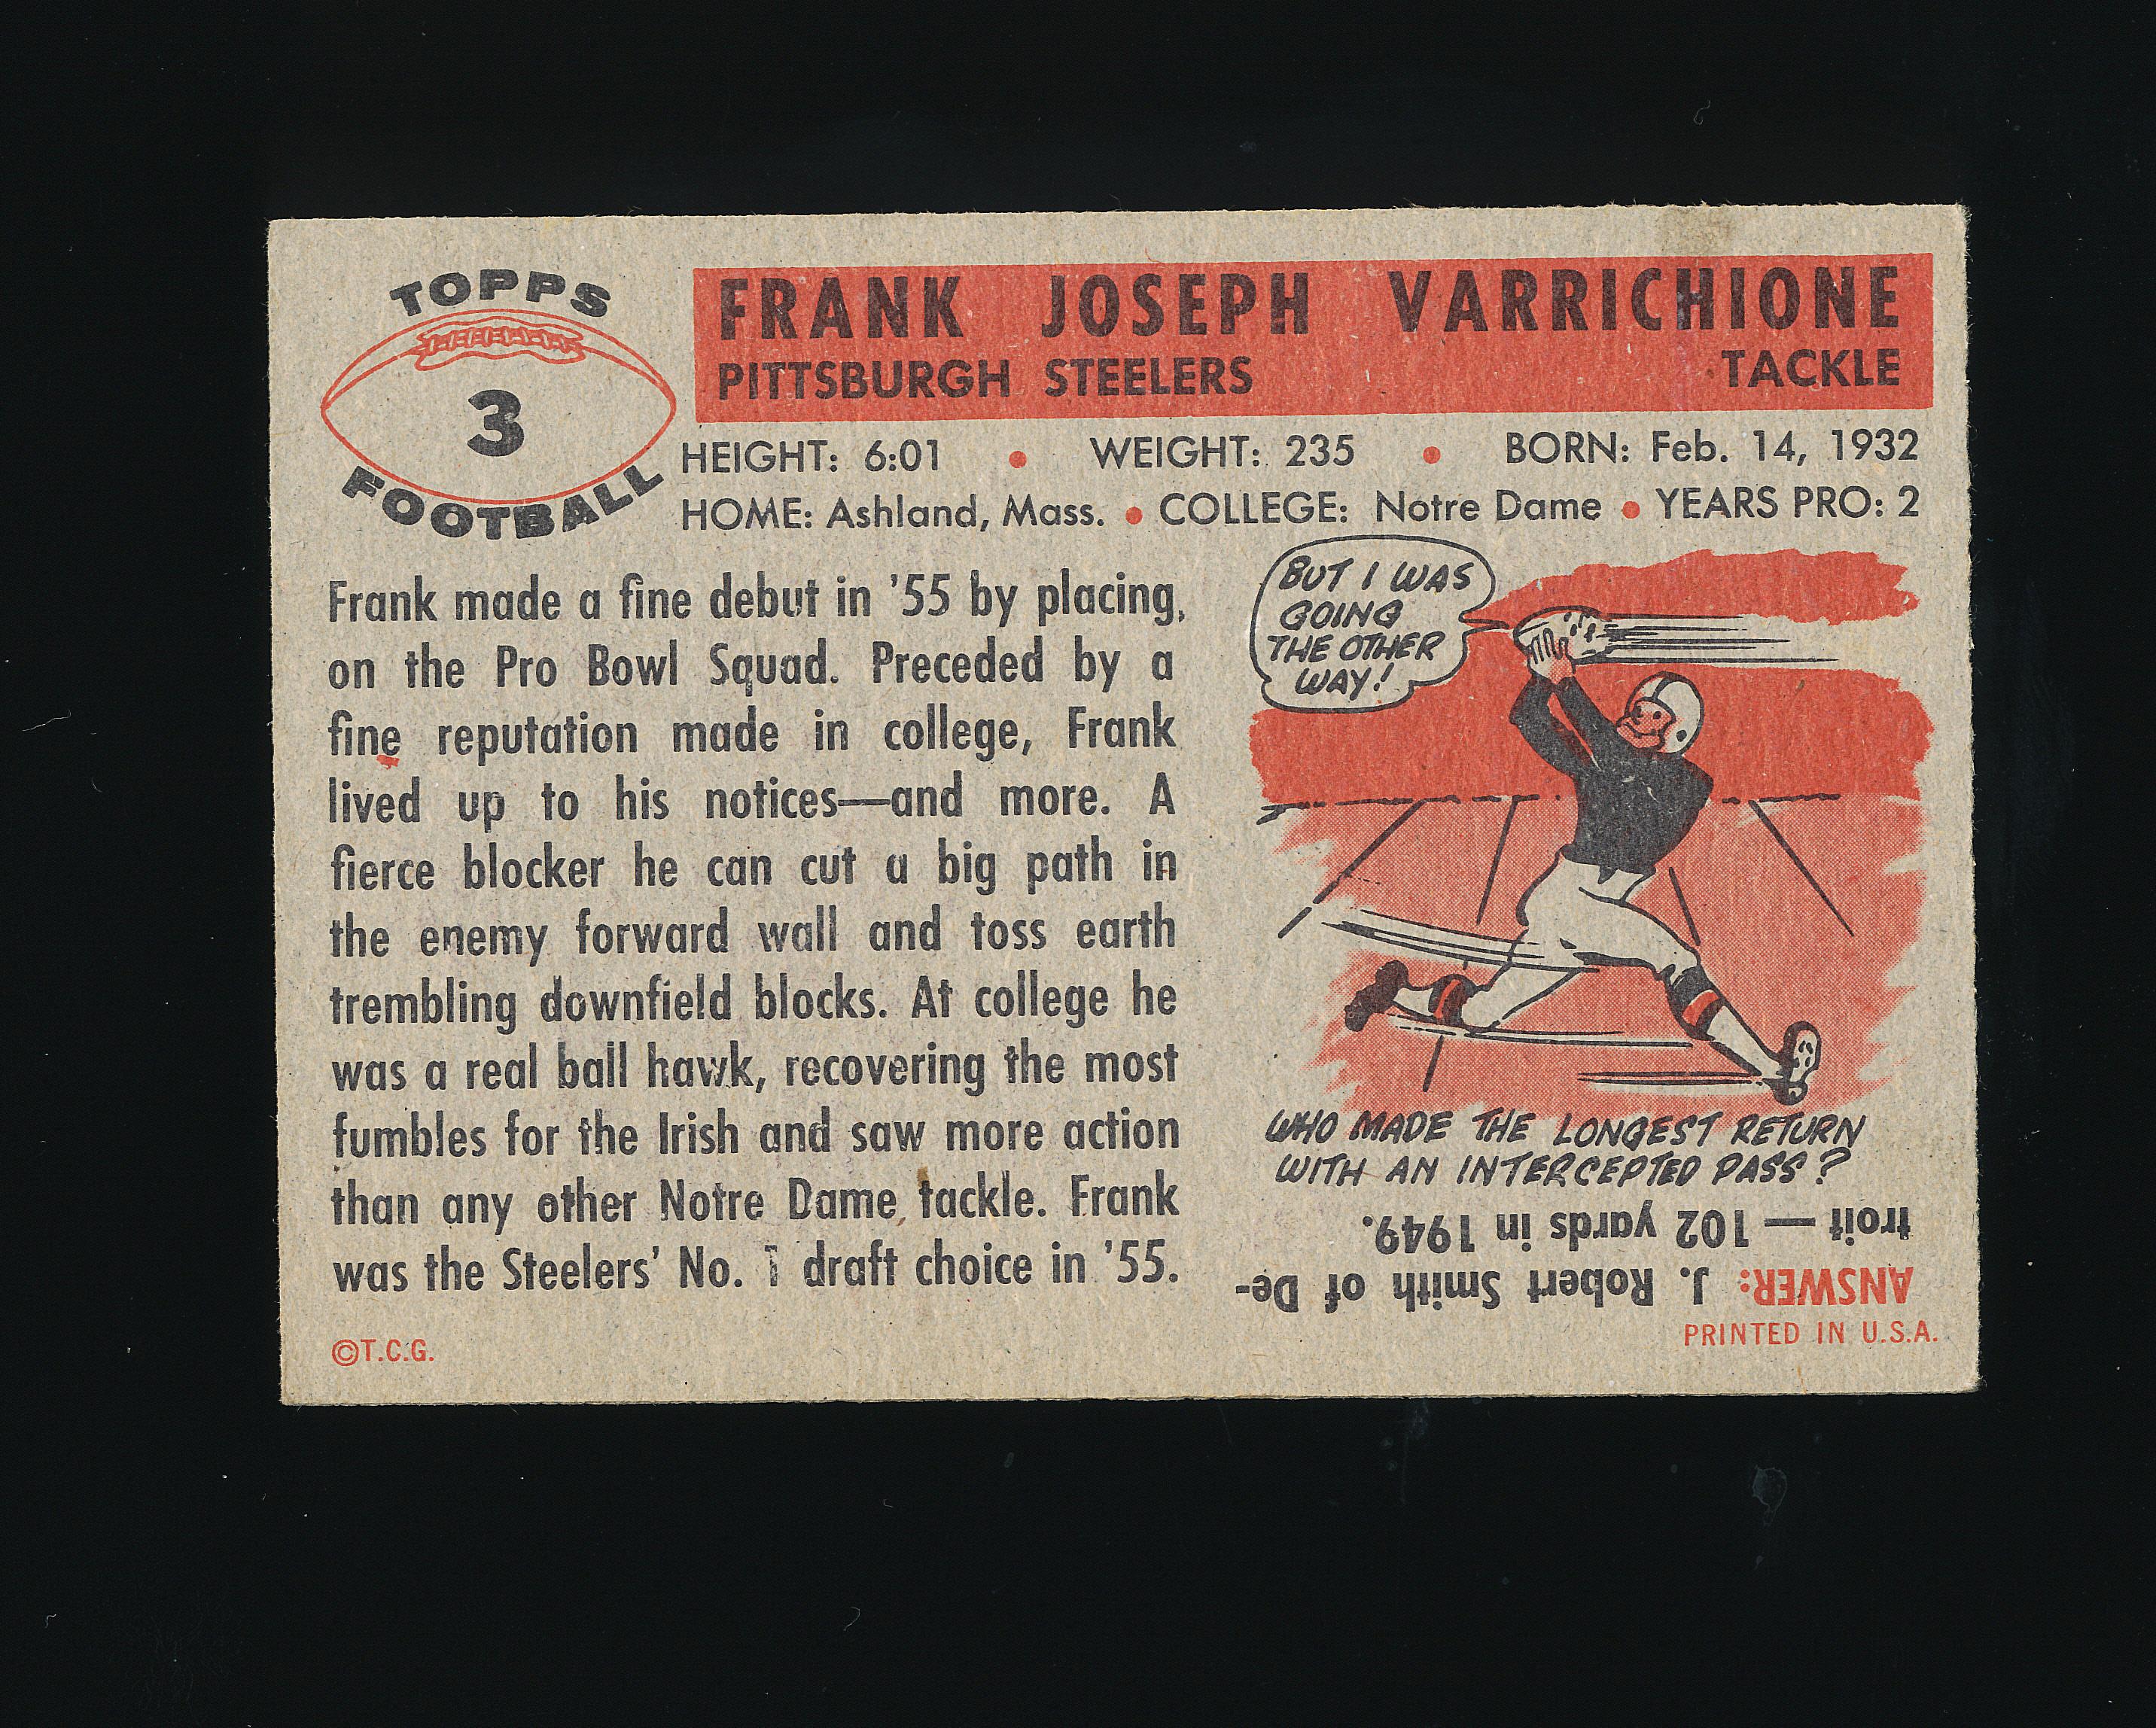 1956 Topps Football Card #3 Frank Joseph Varrichione Pittsburgh Steelers